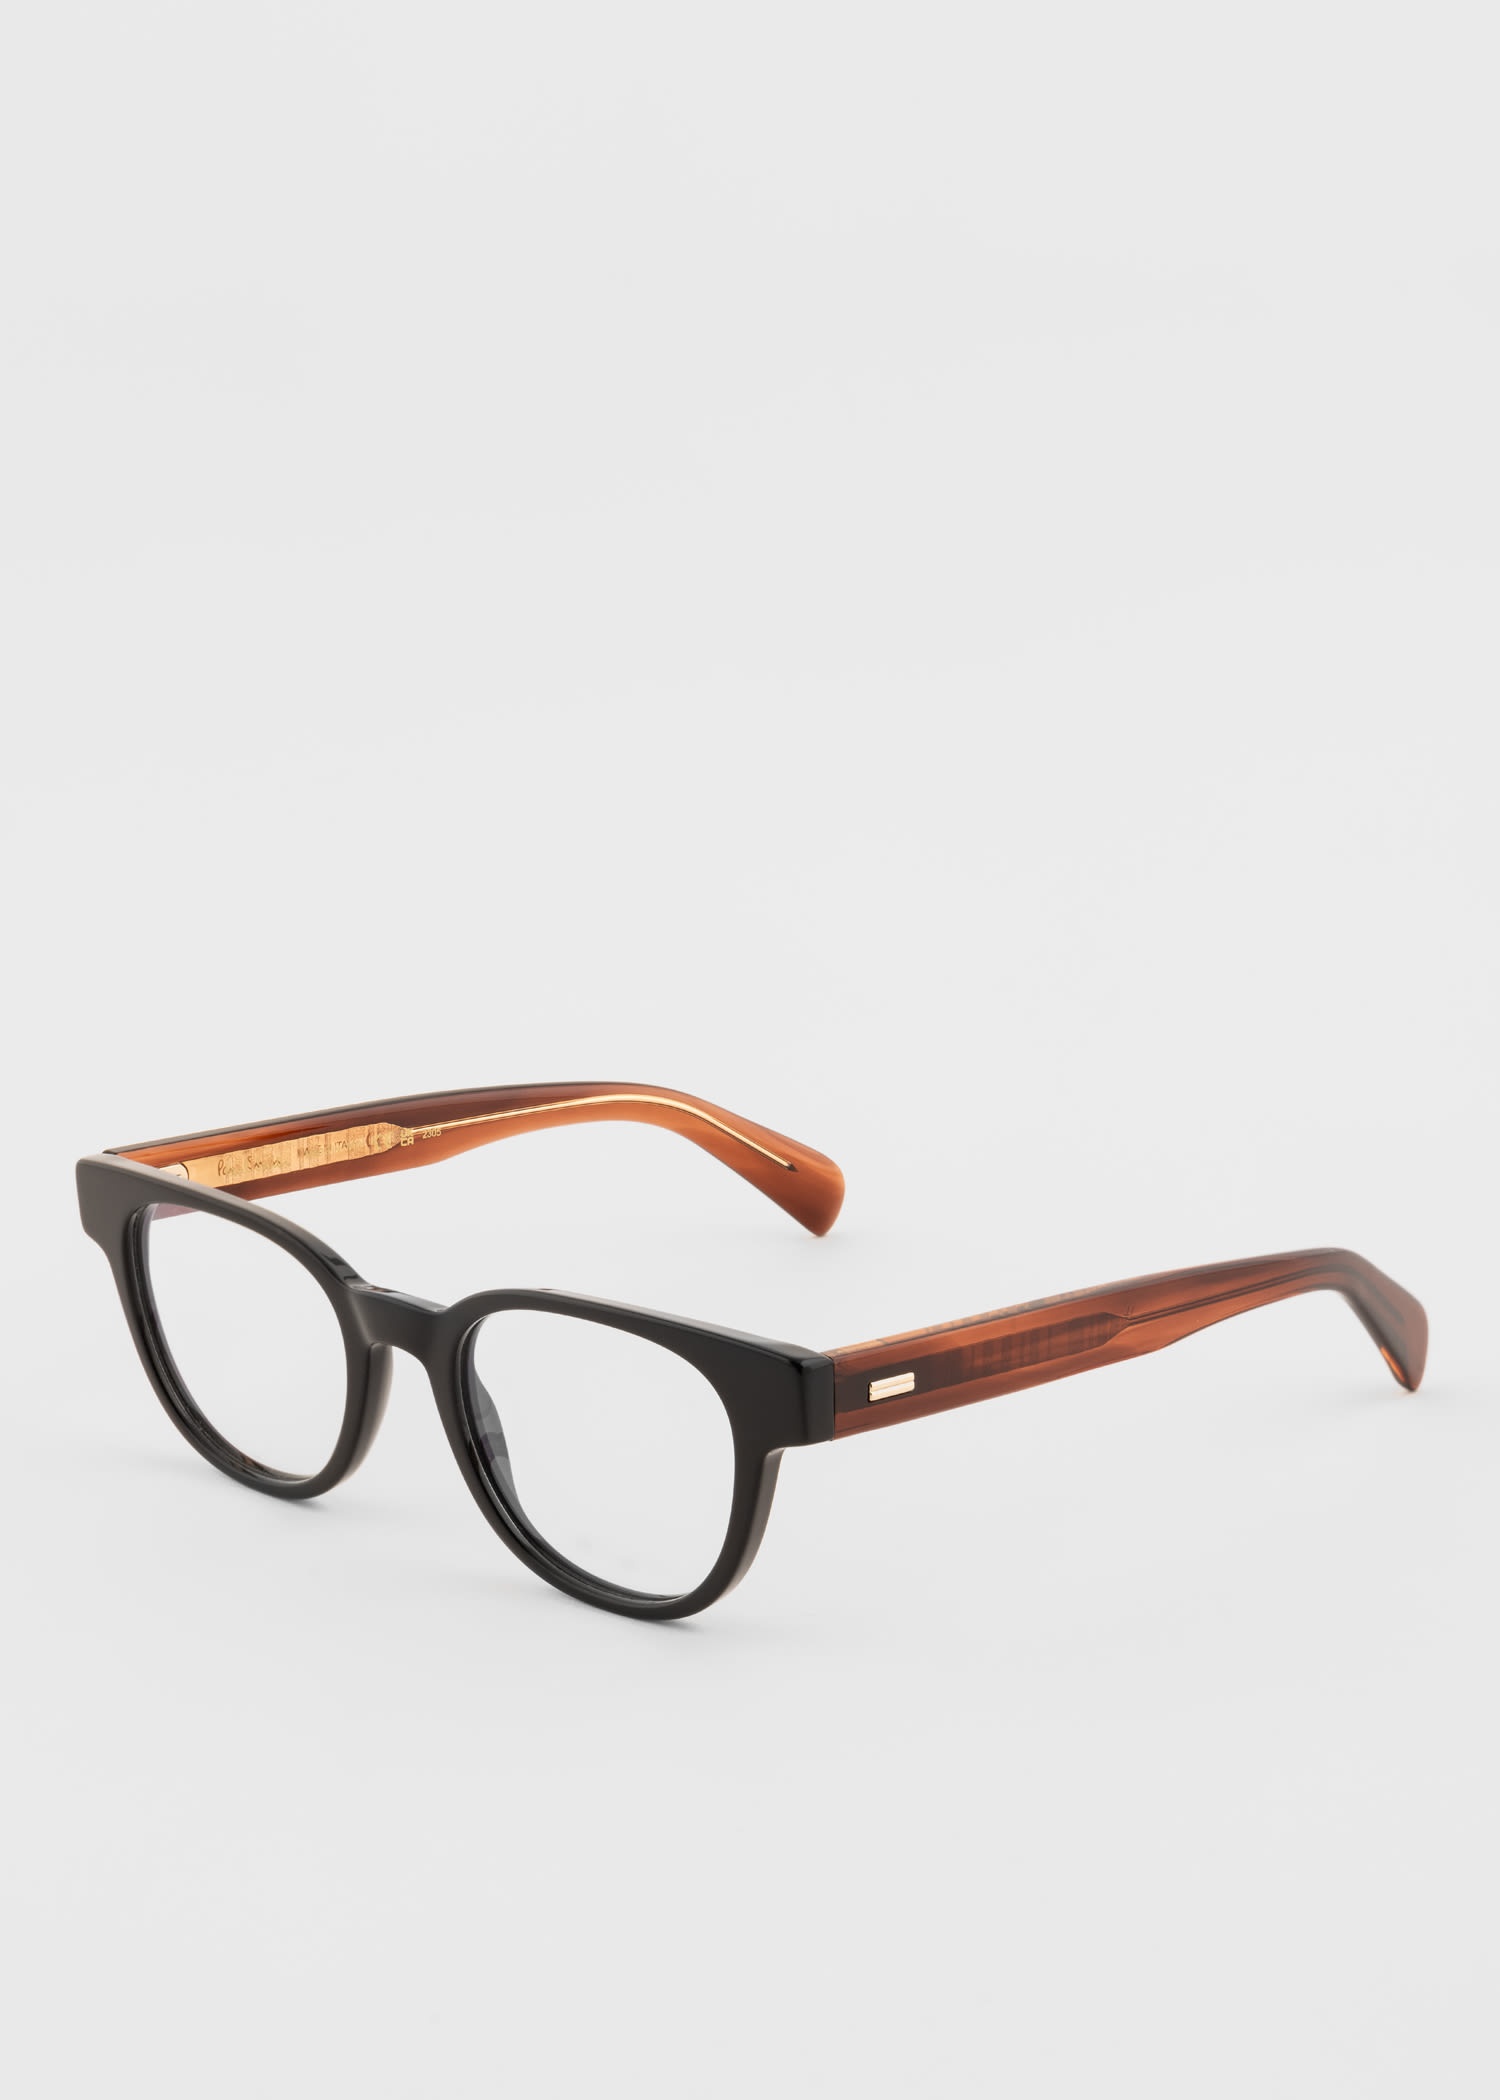 'Haydon' Spectacles - 2